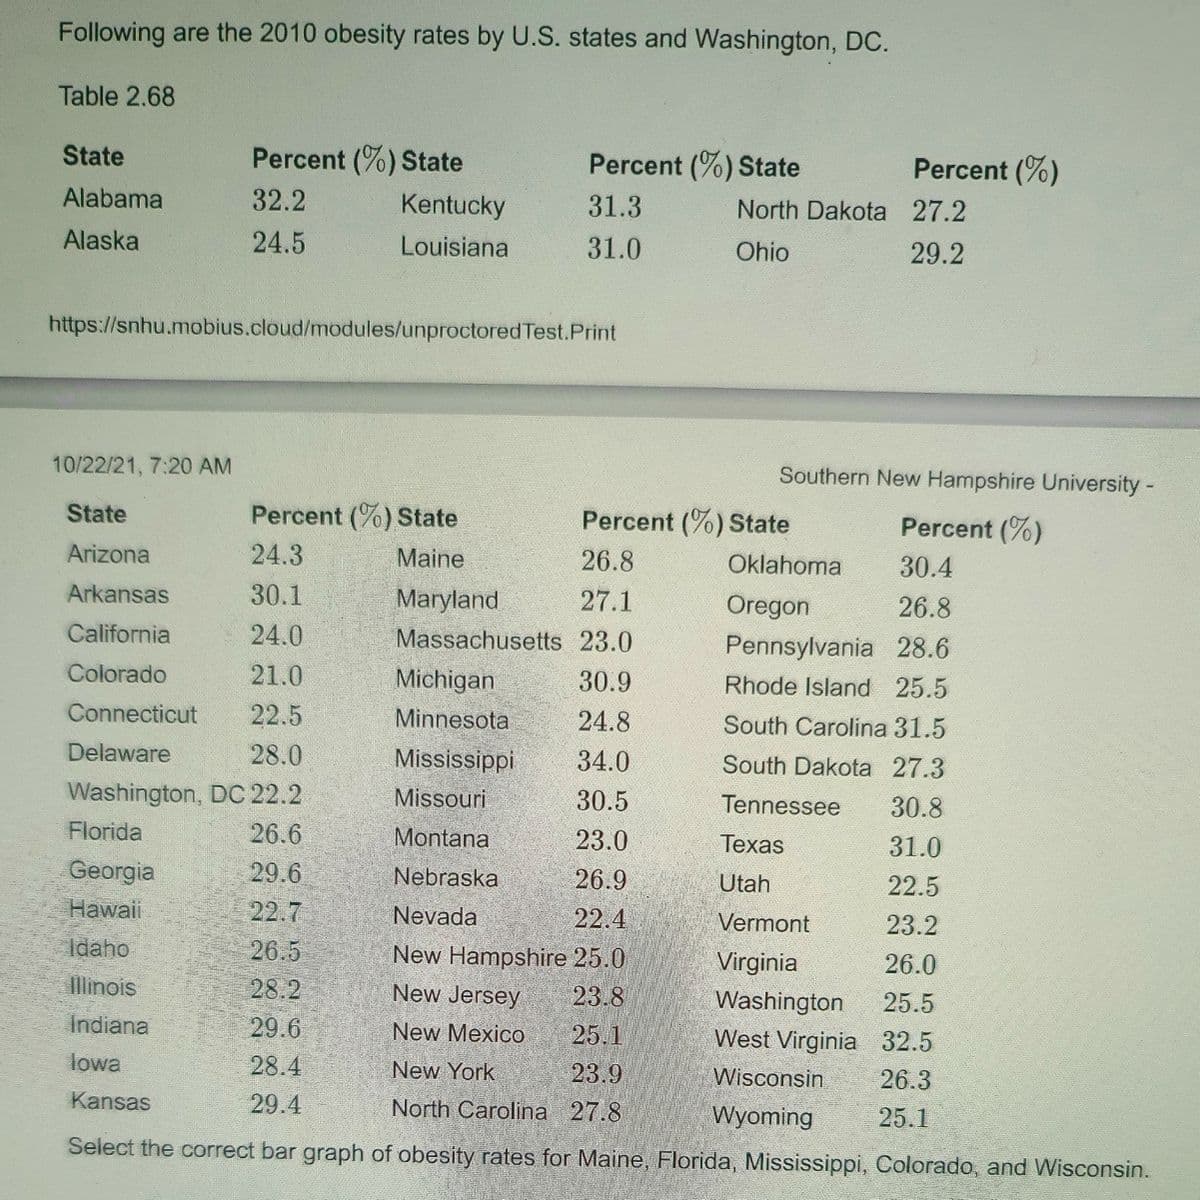 Following are the 2010 obesity rates by U.S. states and Washington, DC.
Table 2.68
State
Percent (%) State
Percent (%) State
Percent (%)
Alabama
32.2
Kentucky
31.3
North Dakota 27.2
Alaska
24.5
Louisiana
31.0
Ohio
29.2
https://snhu.mobius.cloud/modules/unproctoredTest.Print
10/22/21, 7:20 AM
Southern New Hampshire University-
State
Percent (%)State
Percent (%) State
Percent (%)
Arizona
24.3
Maine
26.8
Oklahoma
30.4
30.1
27.1
26.8
Maryland
Massachusetts 23.0
Arkansas
Oregon
California
24.0
Pennsylvania 28.6
Colorado
21.0
Michigan
30.9
Rhode Island 25.5
Connecticut
22.5
Minnesota
24.8
South Carolina 31.5
Delaware
28.0
Mississippi
34.0
South Dakota 27.3
Washington, DC 22.2
Missouri
30.5
Tennessee
30.8
Florida
26.6
Montana
23.0
Texas
31.0
29.6
22.7
Georgia
Nebraska
26.9
Utah
22.5
Нawai
Nevada
22.4
Vermont
23.2
Idaho
26.5
New Hampshire 25.0
Virginia
26.0
llinois
28.2
New Jersey
23.8
25.5
Washington
West Virginia 32.5
İndiana
29.6
New Mexico
25.1
lowa
28.4
New York
23.9
Wisconsin
26.3
Kansas
29.4
North Carolina 27.8
Wyoming
25.1
Select the correct bar graph of obesity rates for Maine, Florida, Mississippi, Colorado, and Wisconsin.
